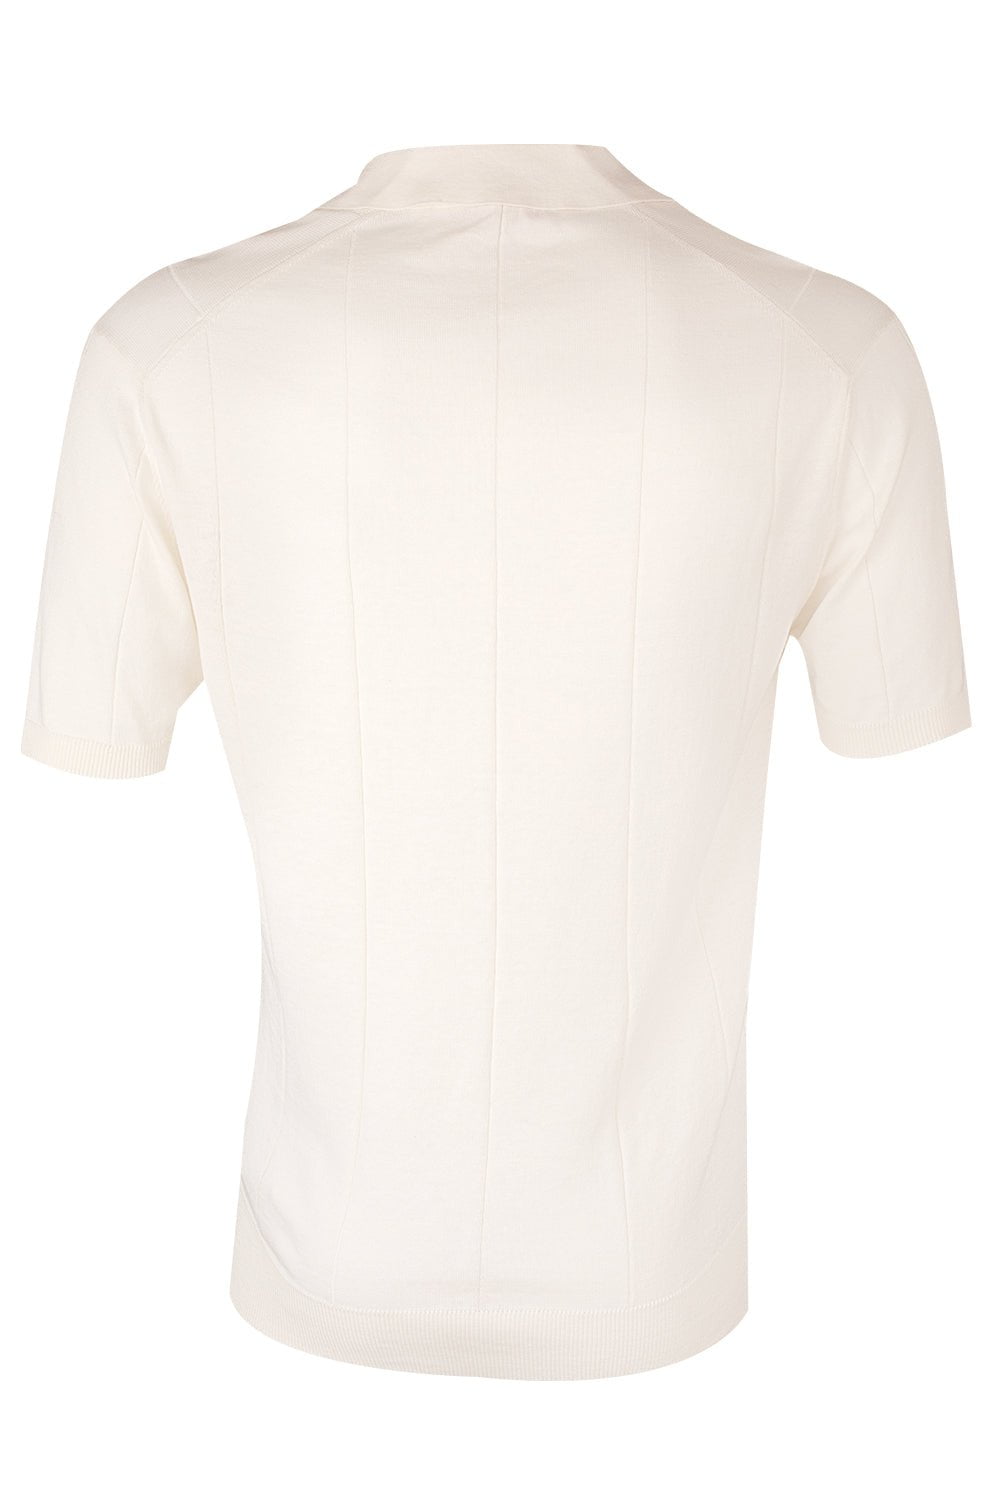 Horton Shirt - White Sand MENSCLOTHINGSHIRT ORLEBAR BROWN   